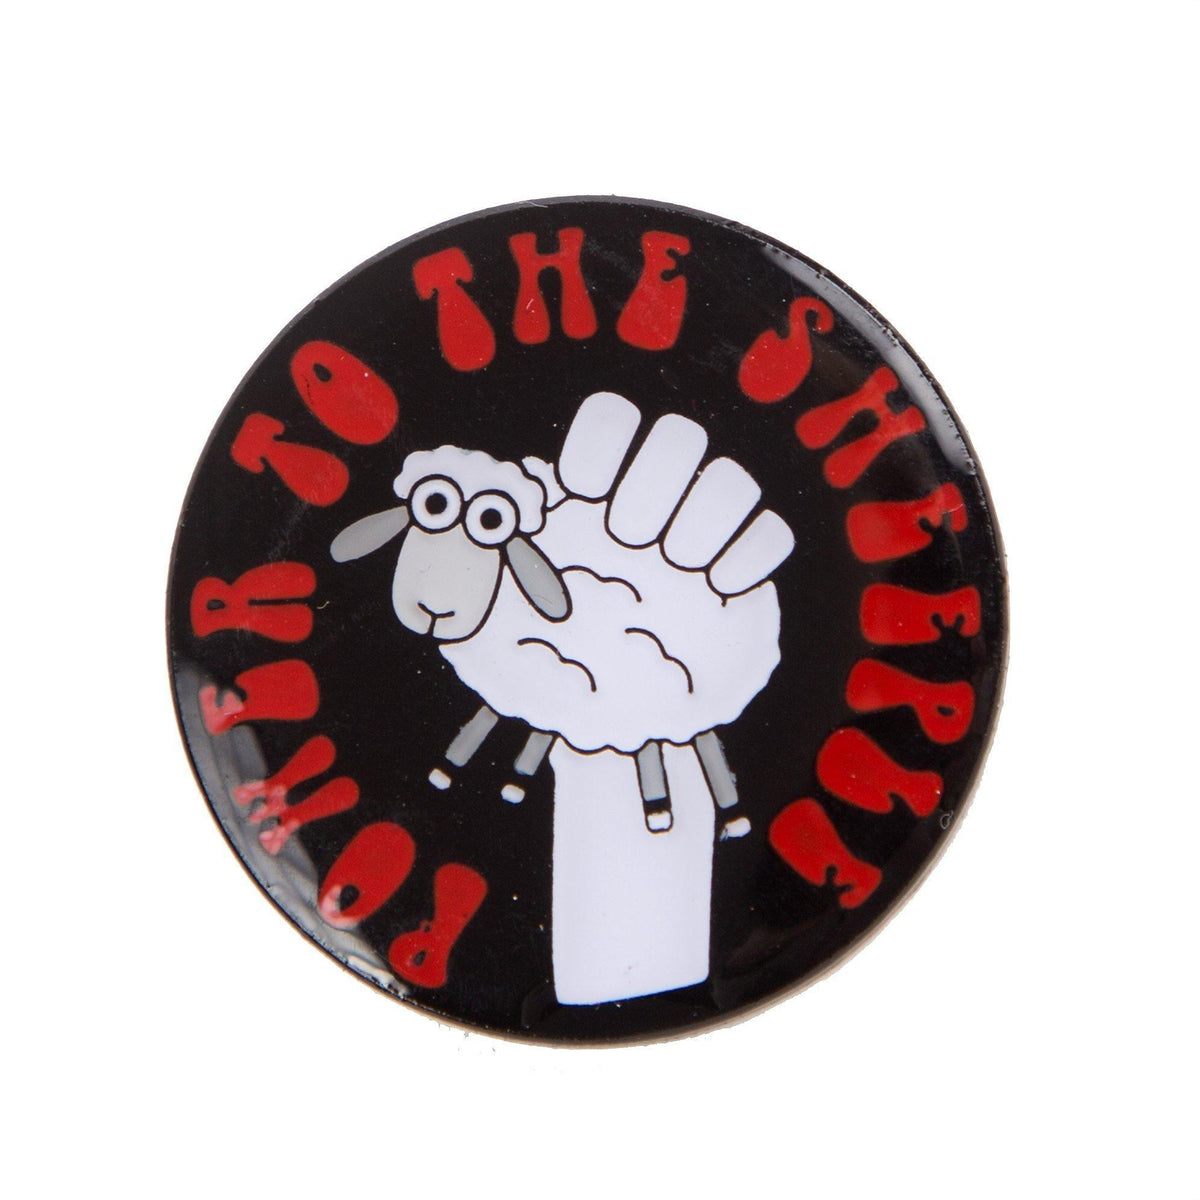 Power to the Sheeple Pin Badge - tribeyarns